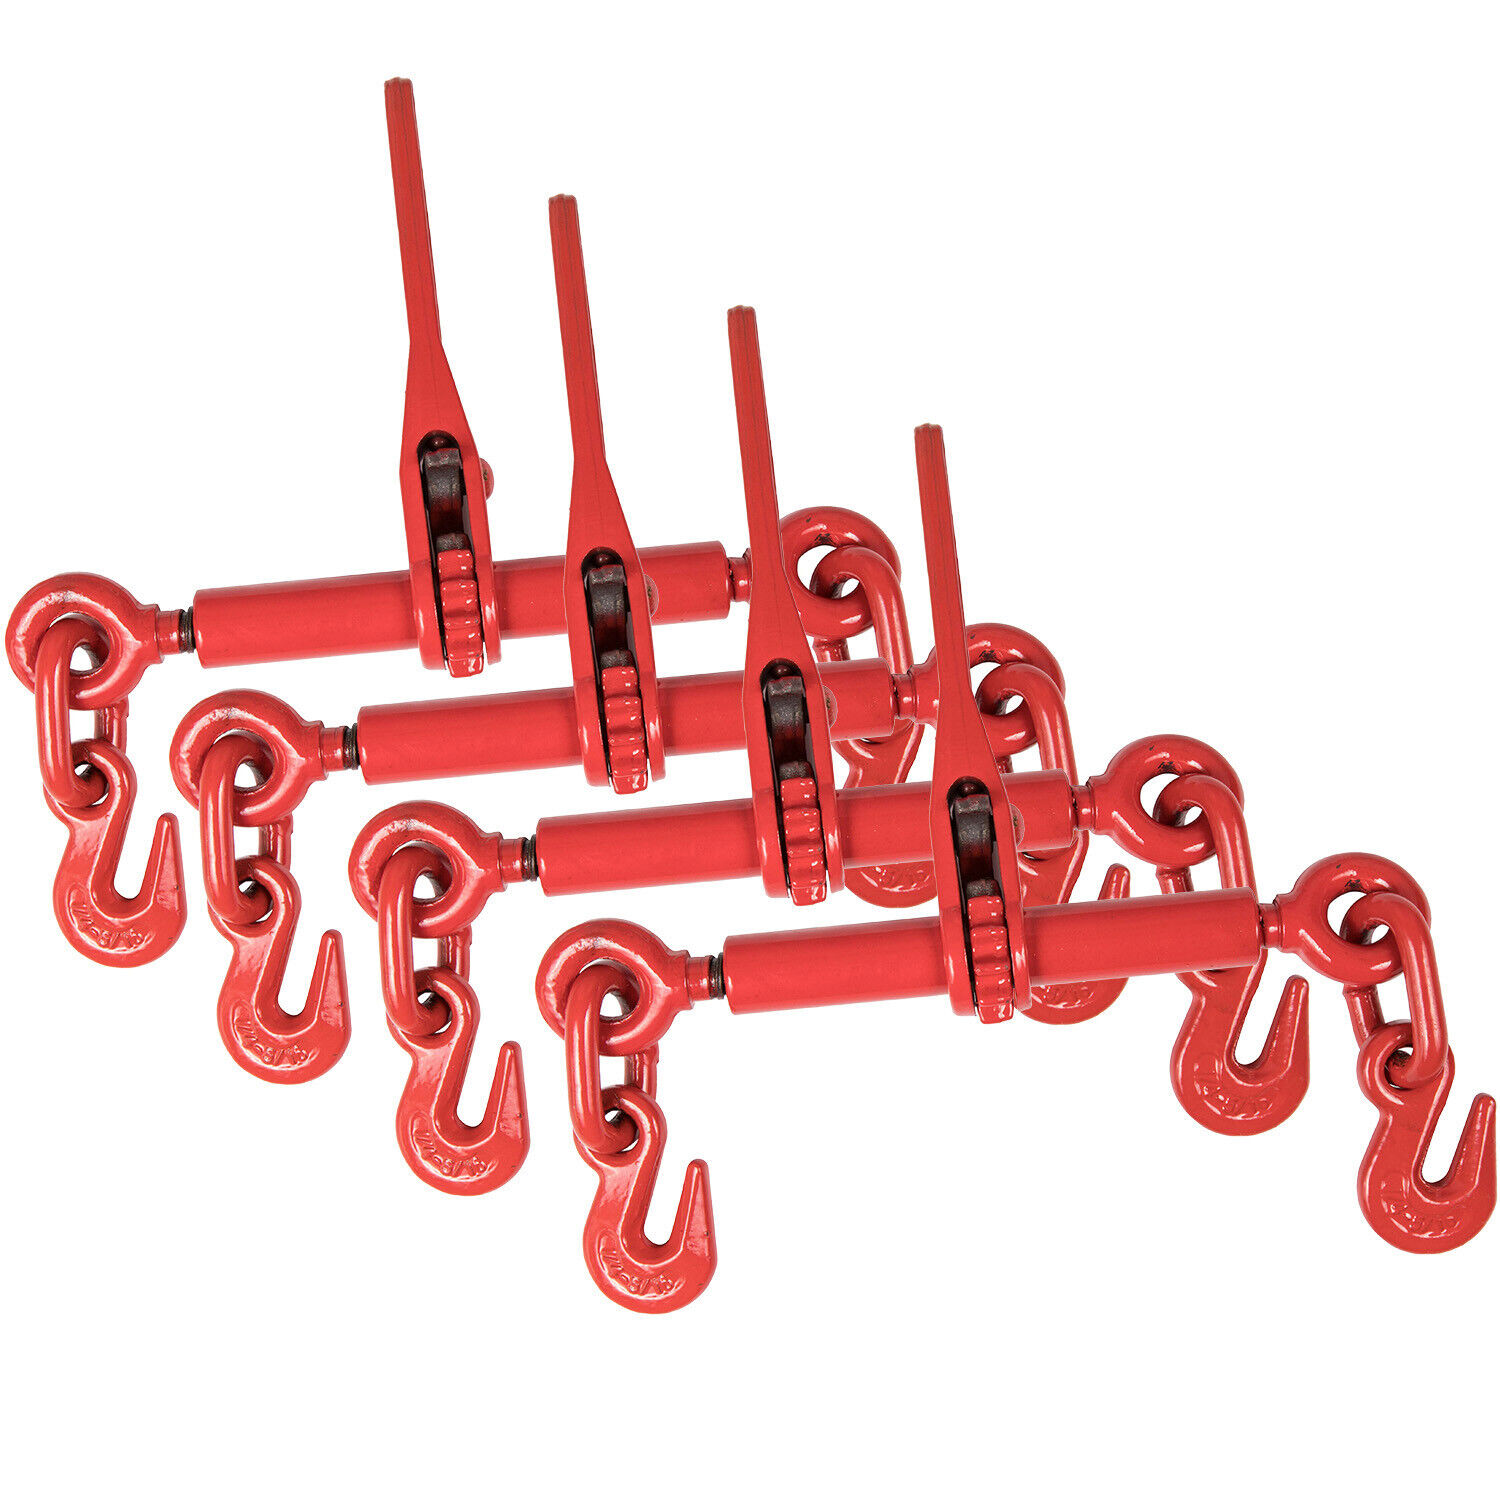 4 X Ratchet Chain Load Binder 3/8"- 1/2", Chain Hook Tie Down Rigging Equipment